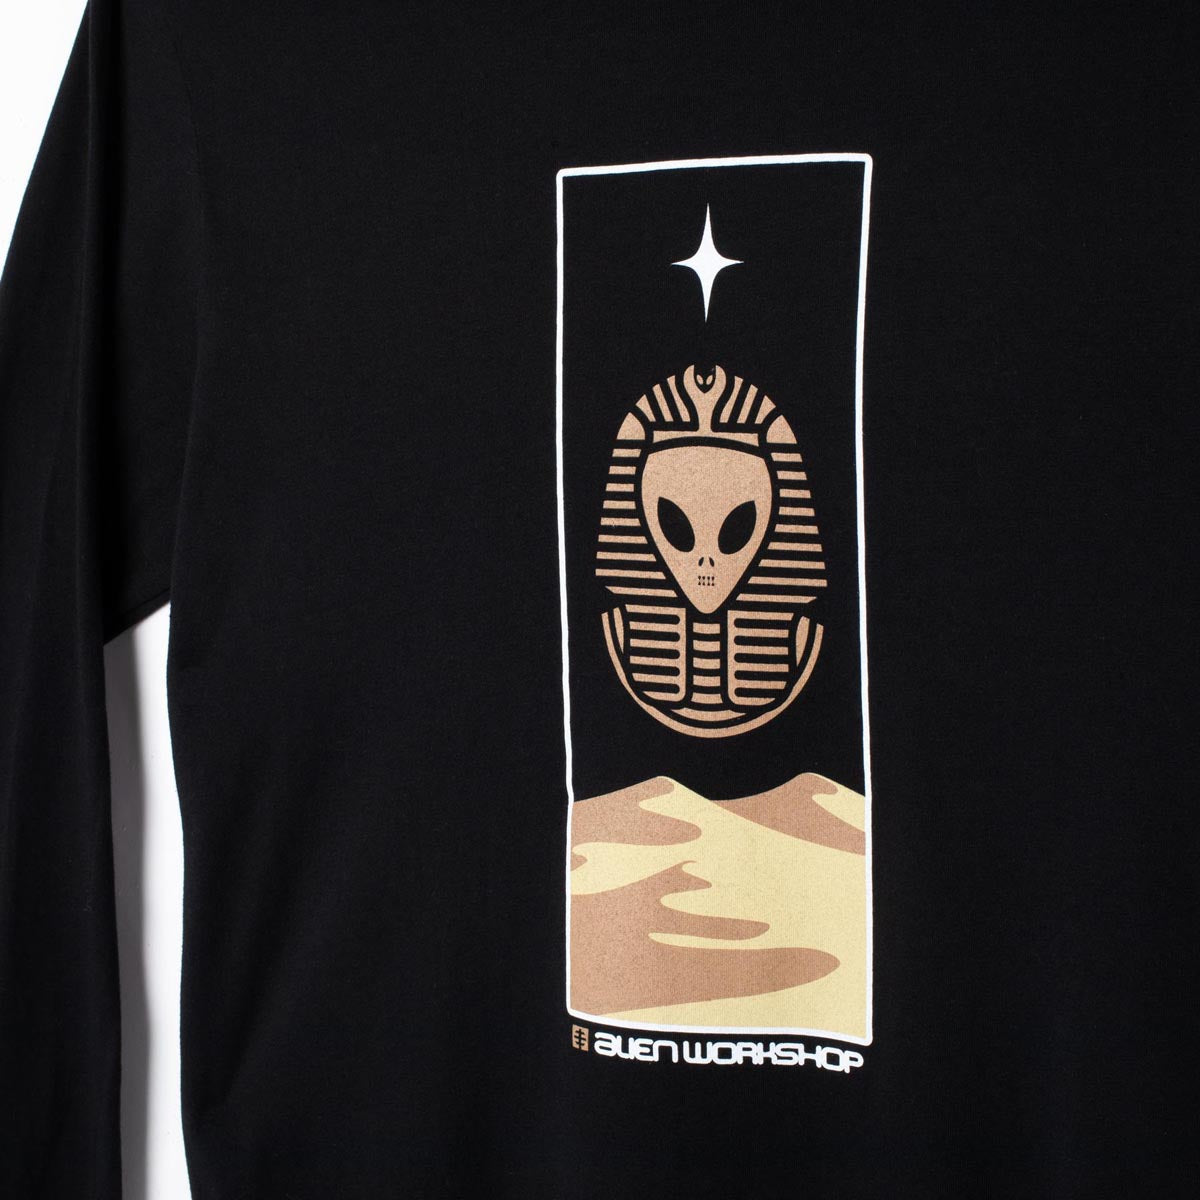 Alien Workshop Theurgy Long Sleeve T-Shirt - Black image 2